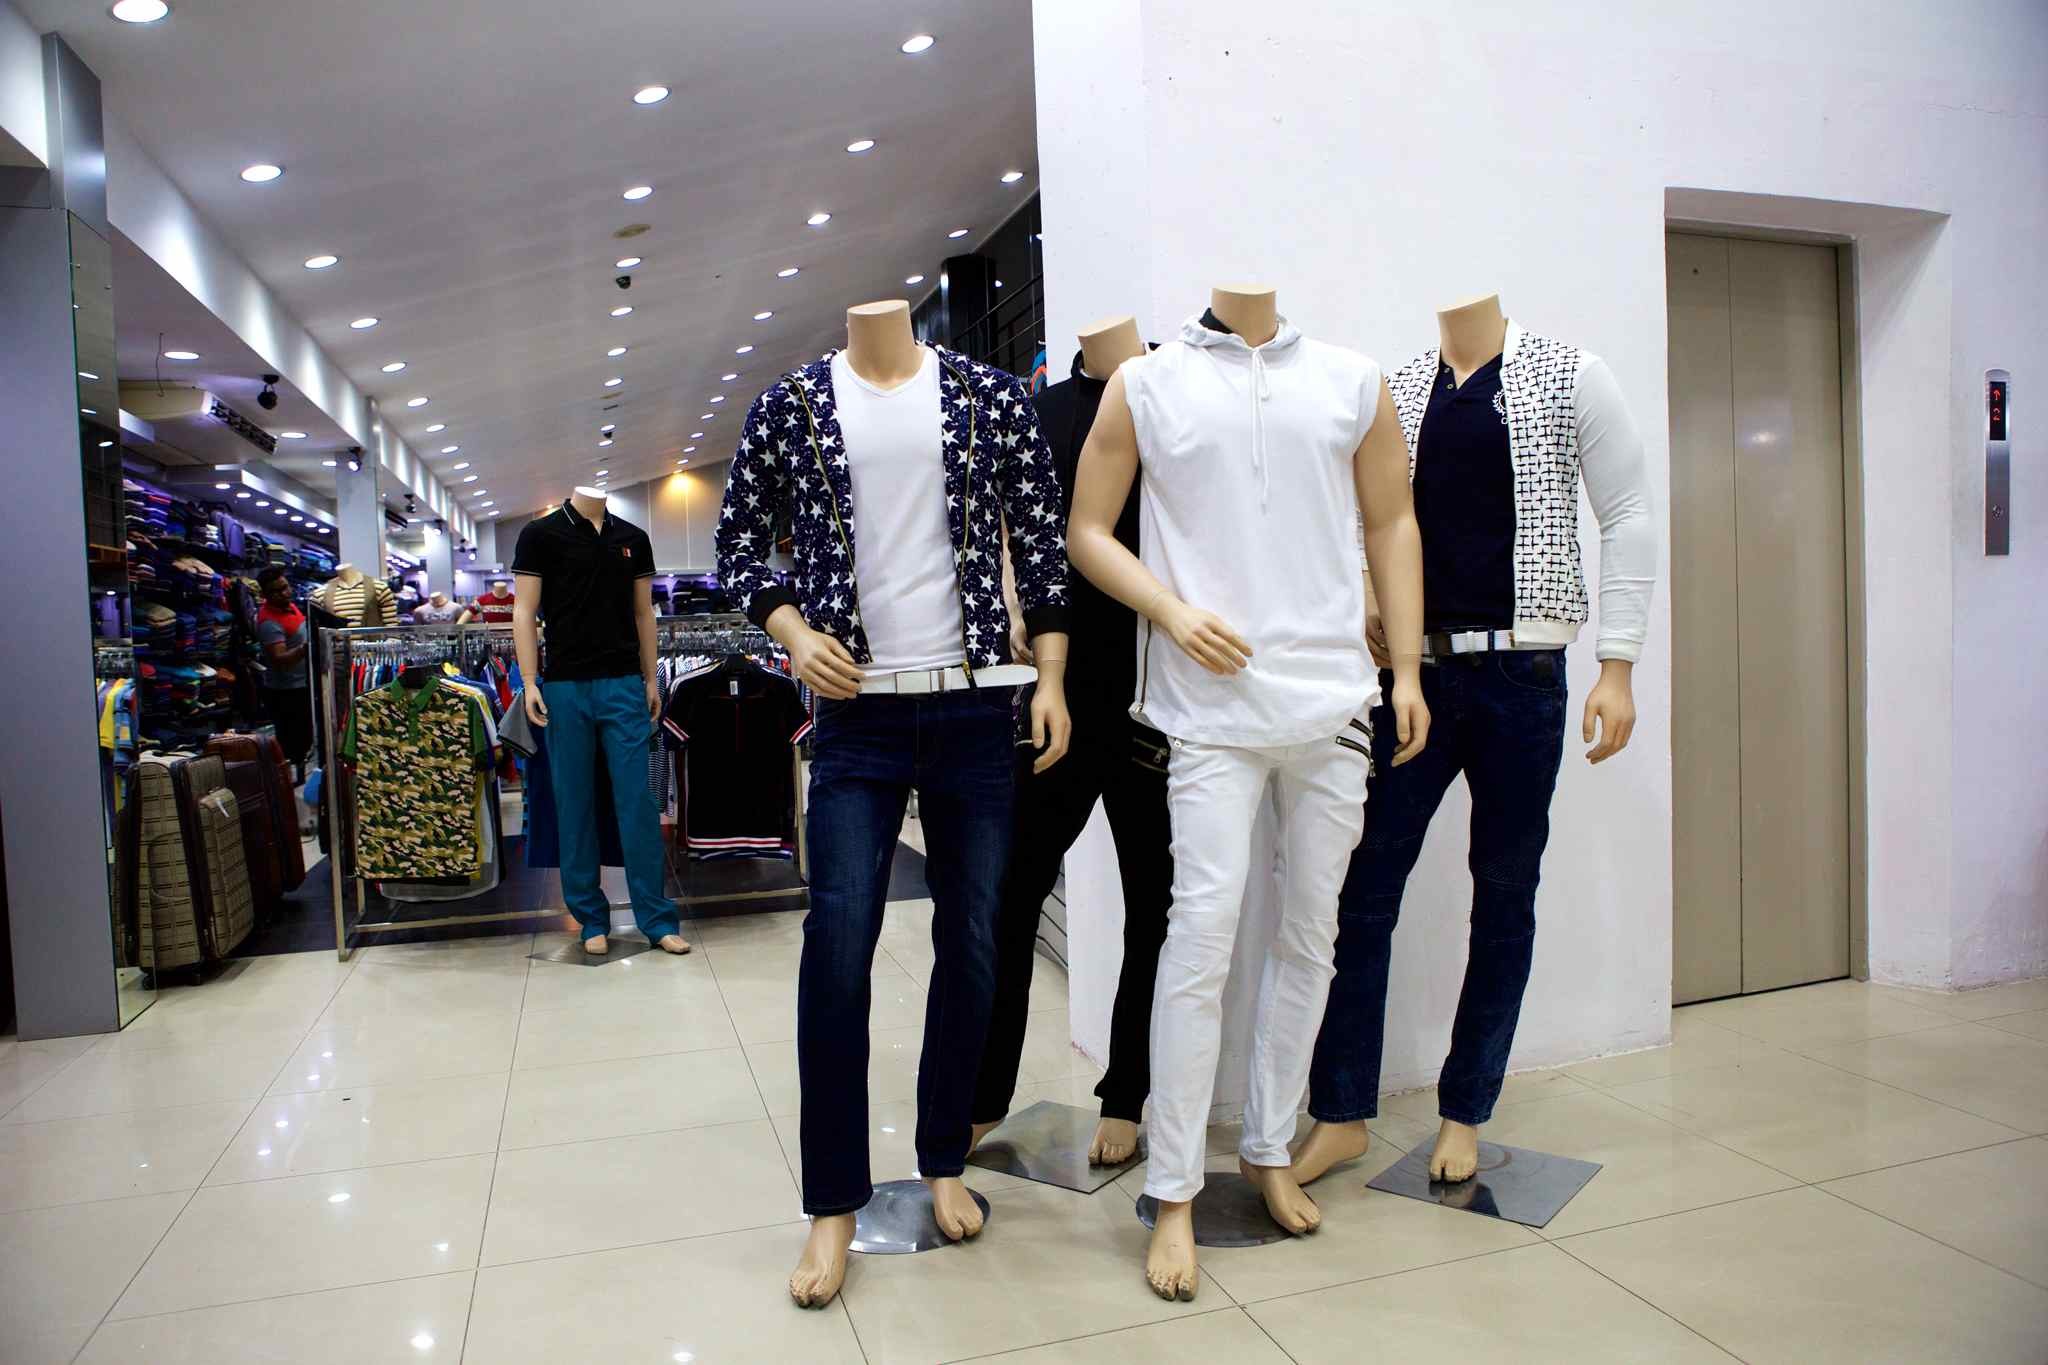 Hameedia - The Smart wardrobe starts with the basics. .... | Facebook